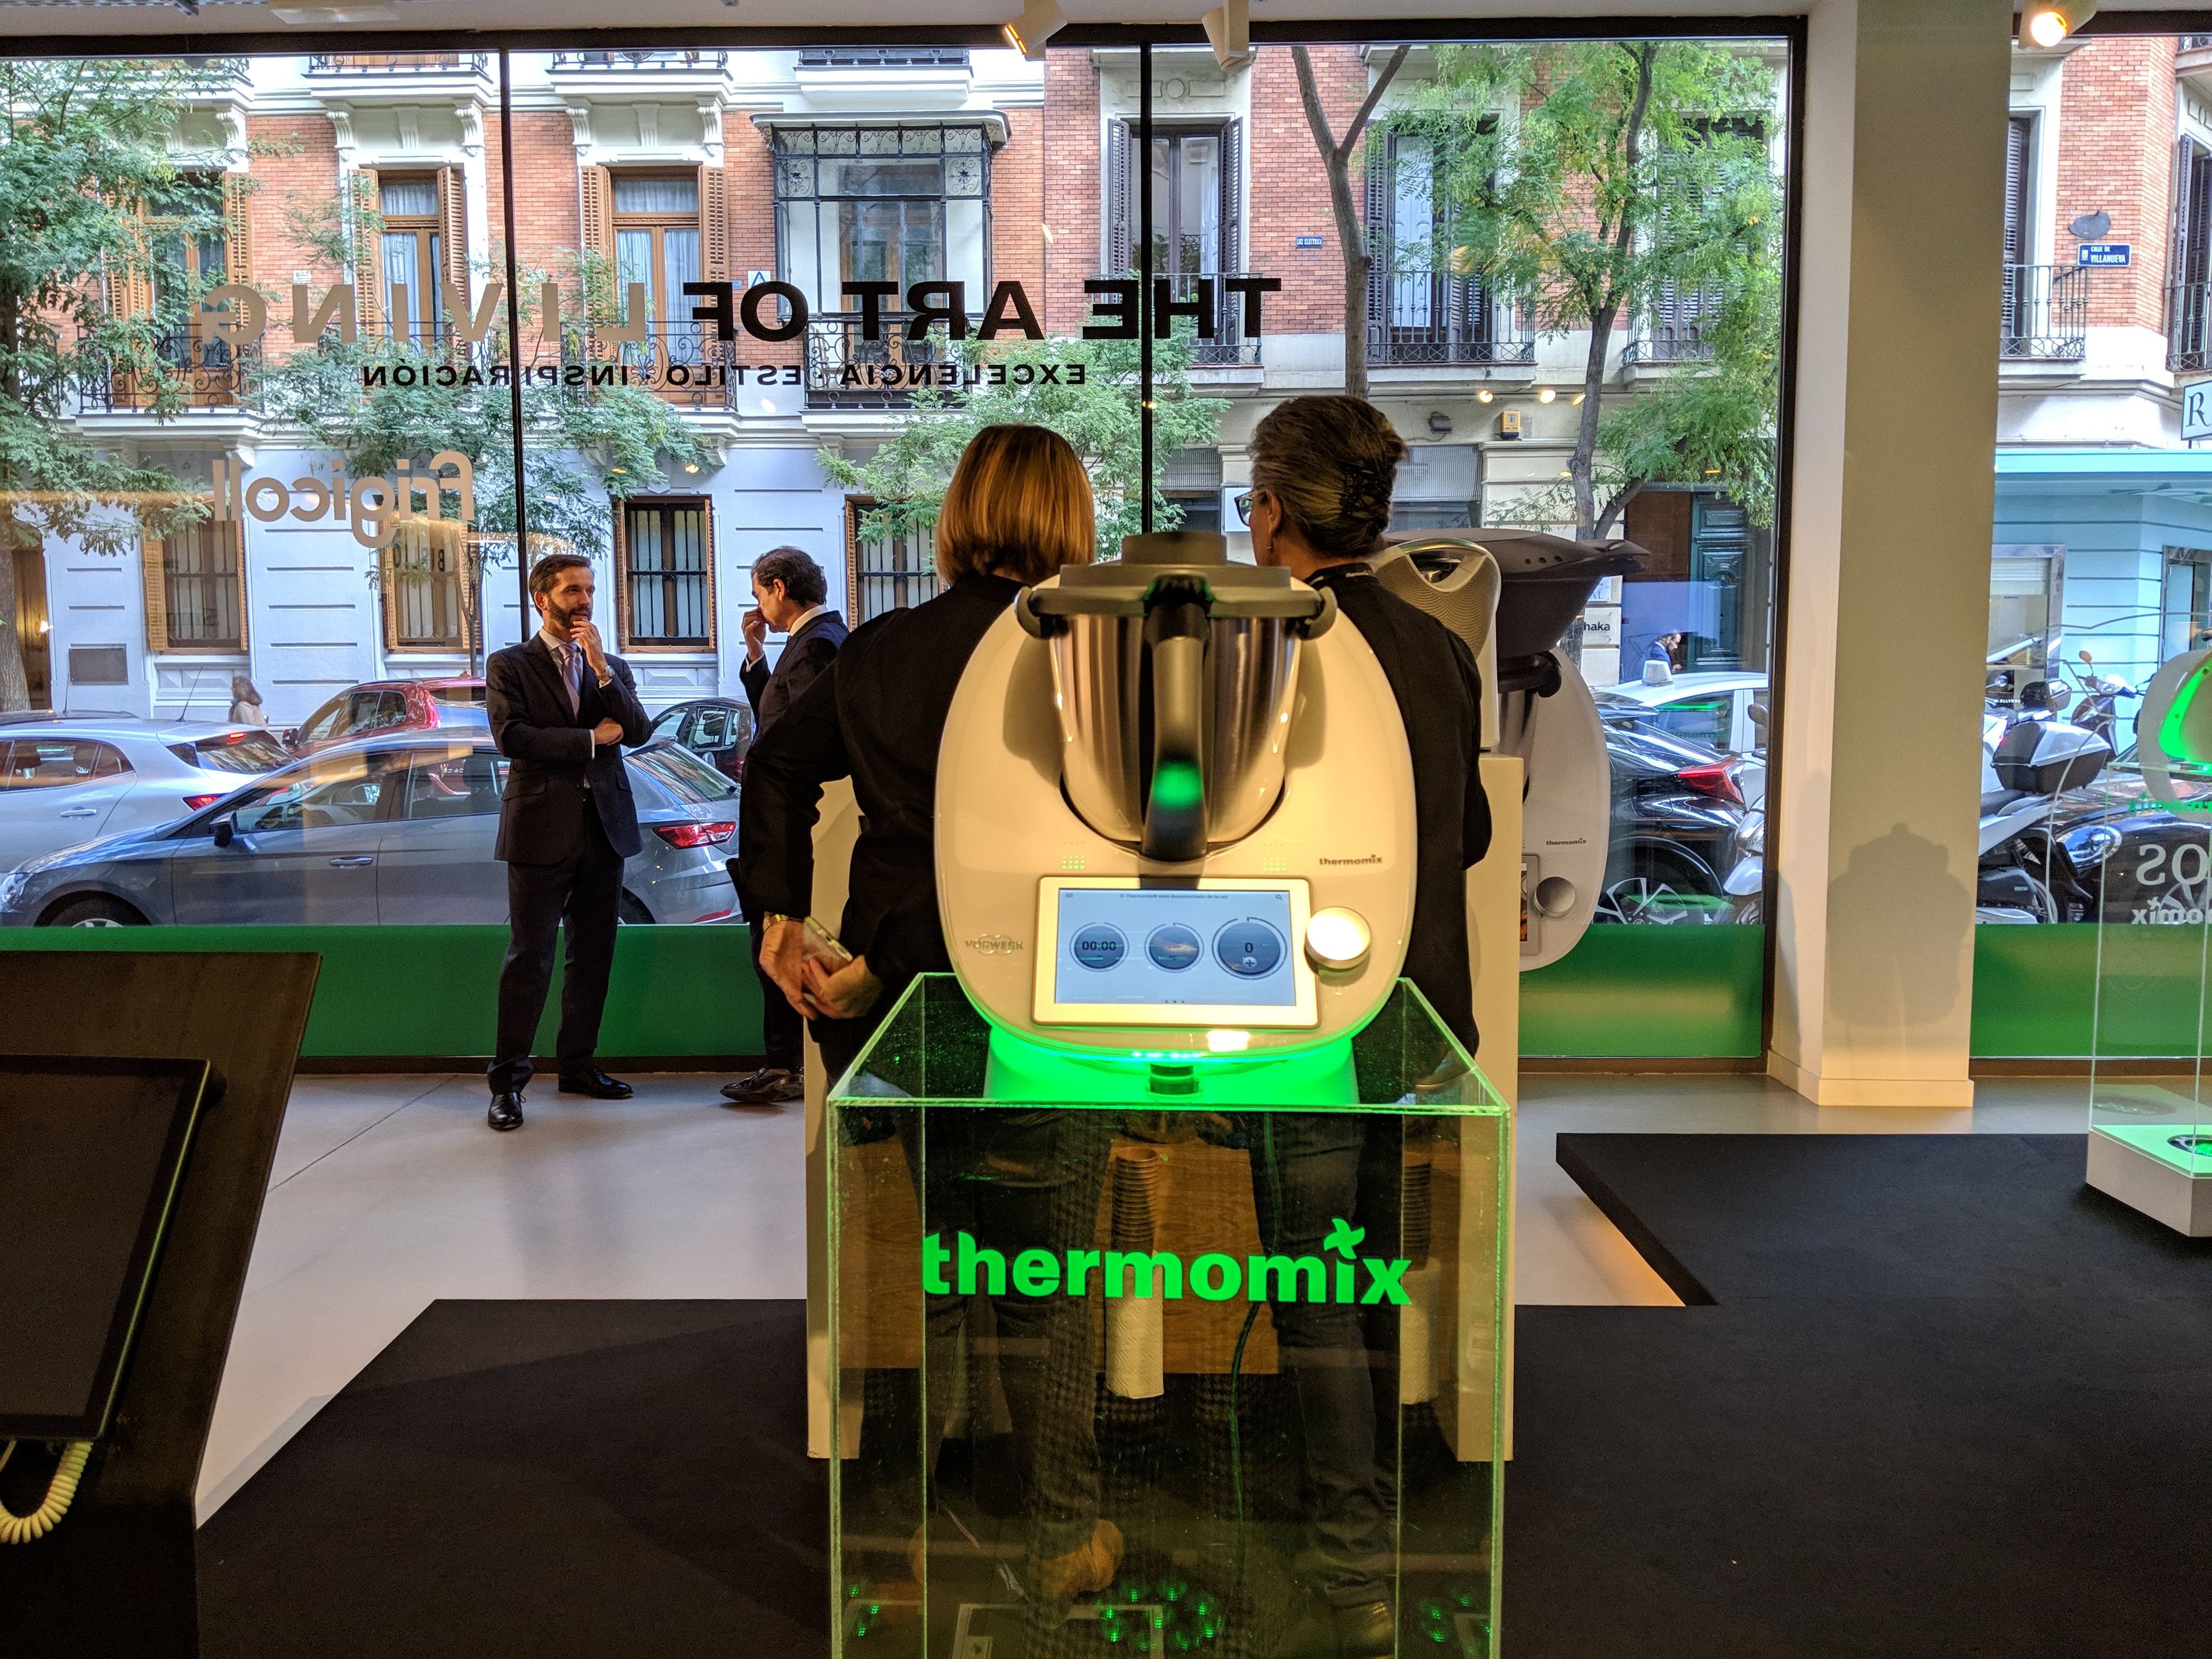 La primera pop up store de Thermomix situada en el centro de Madrid.